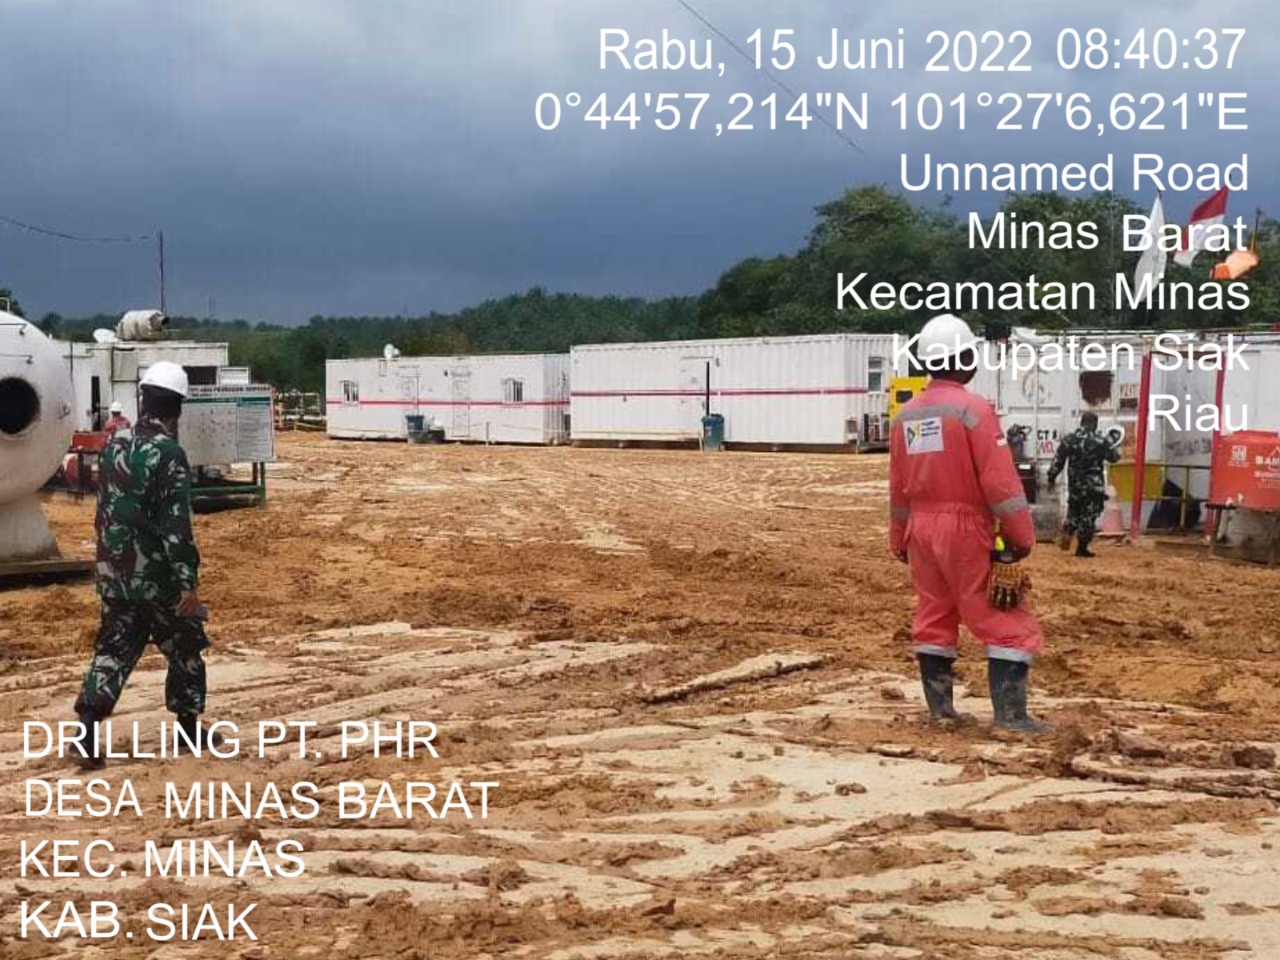 Serka Alif,Sertu Ardhi & Sertu Susiawan Giat Lakukan Patroli Drilling Disejumlah Lokasi PT PHR Minas